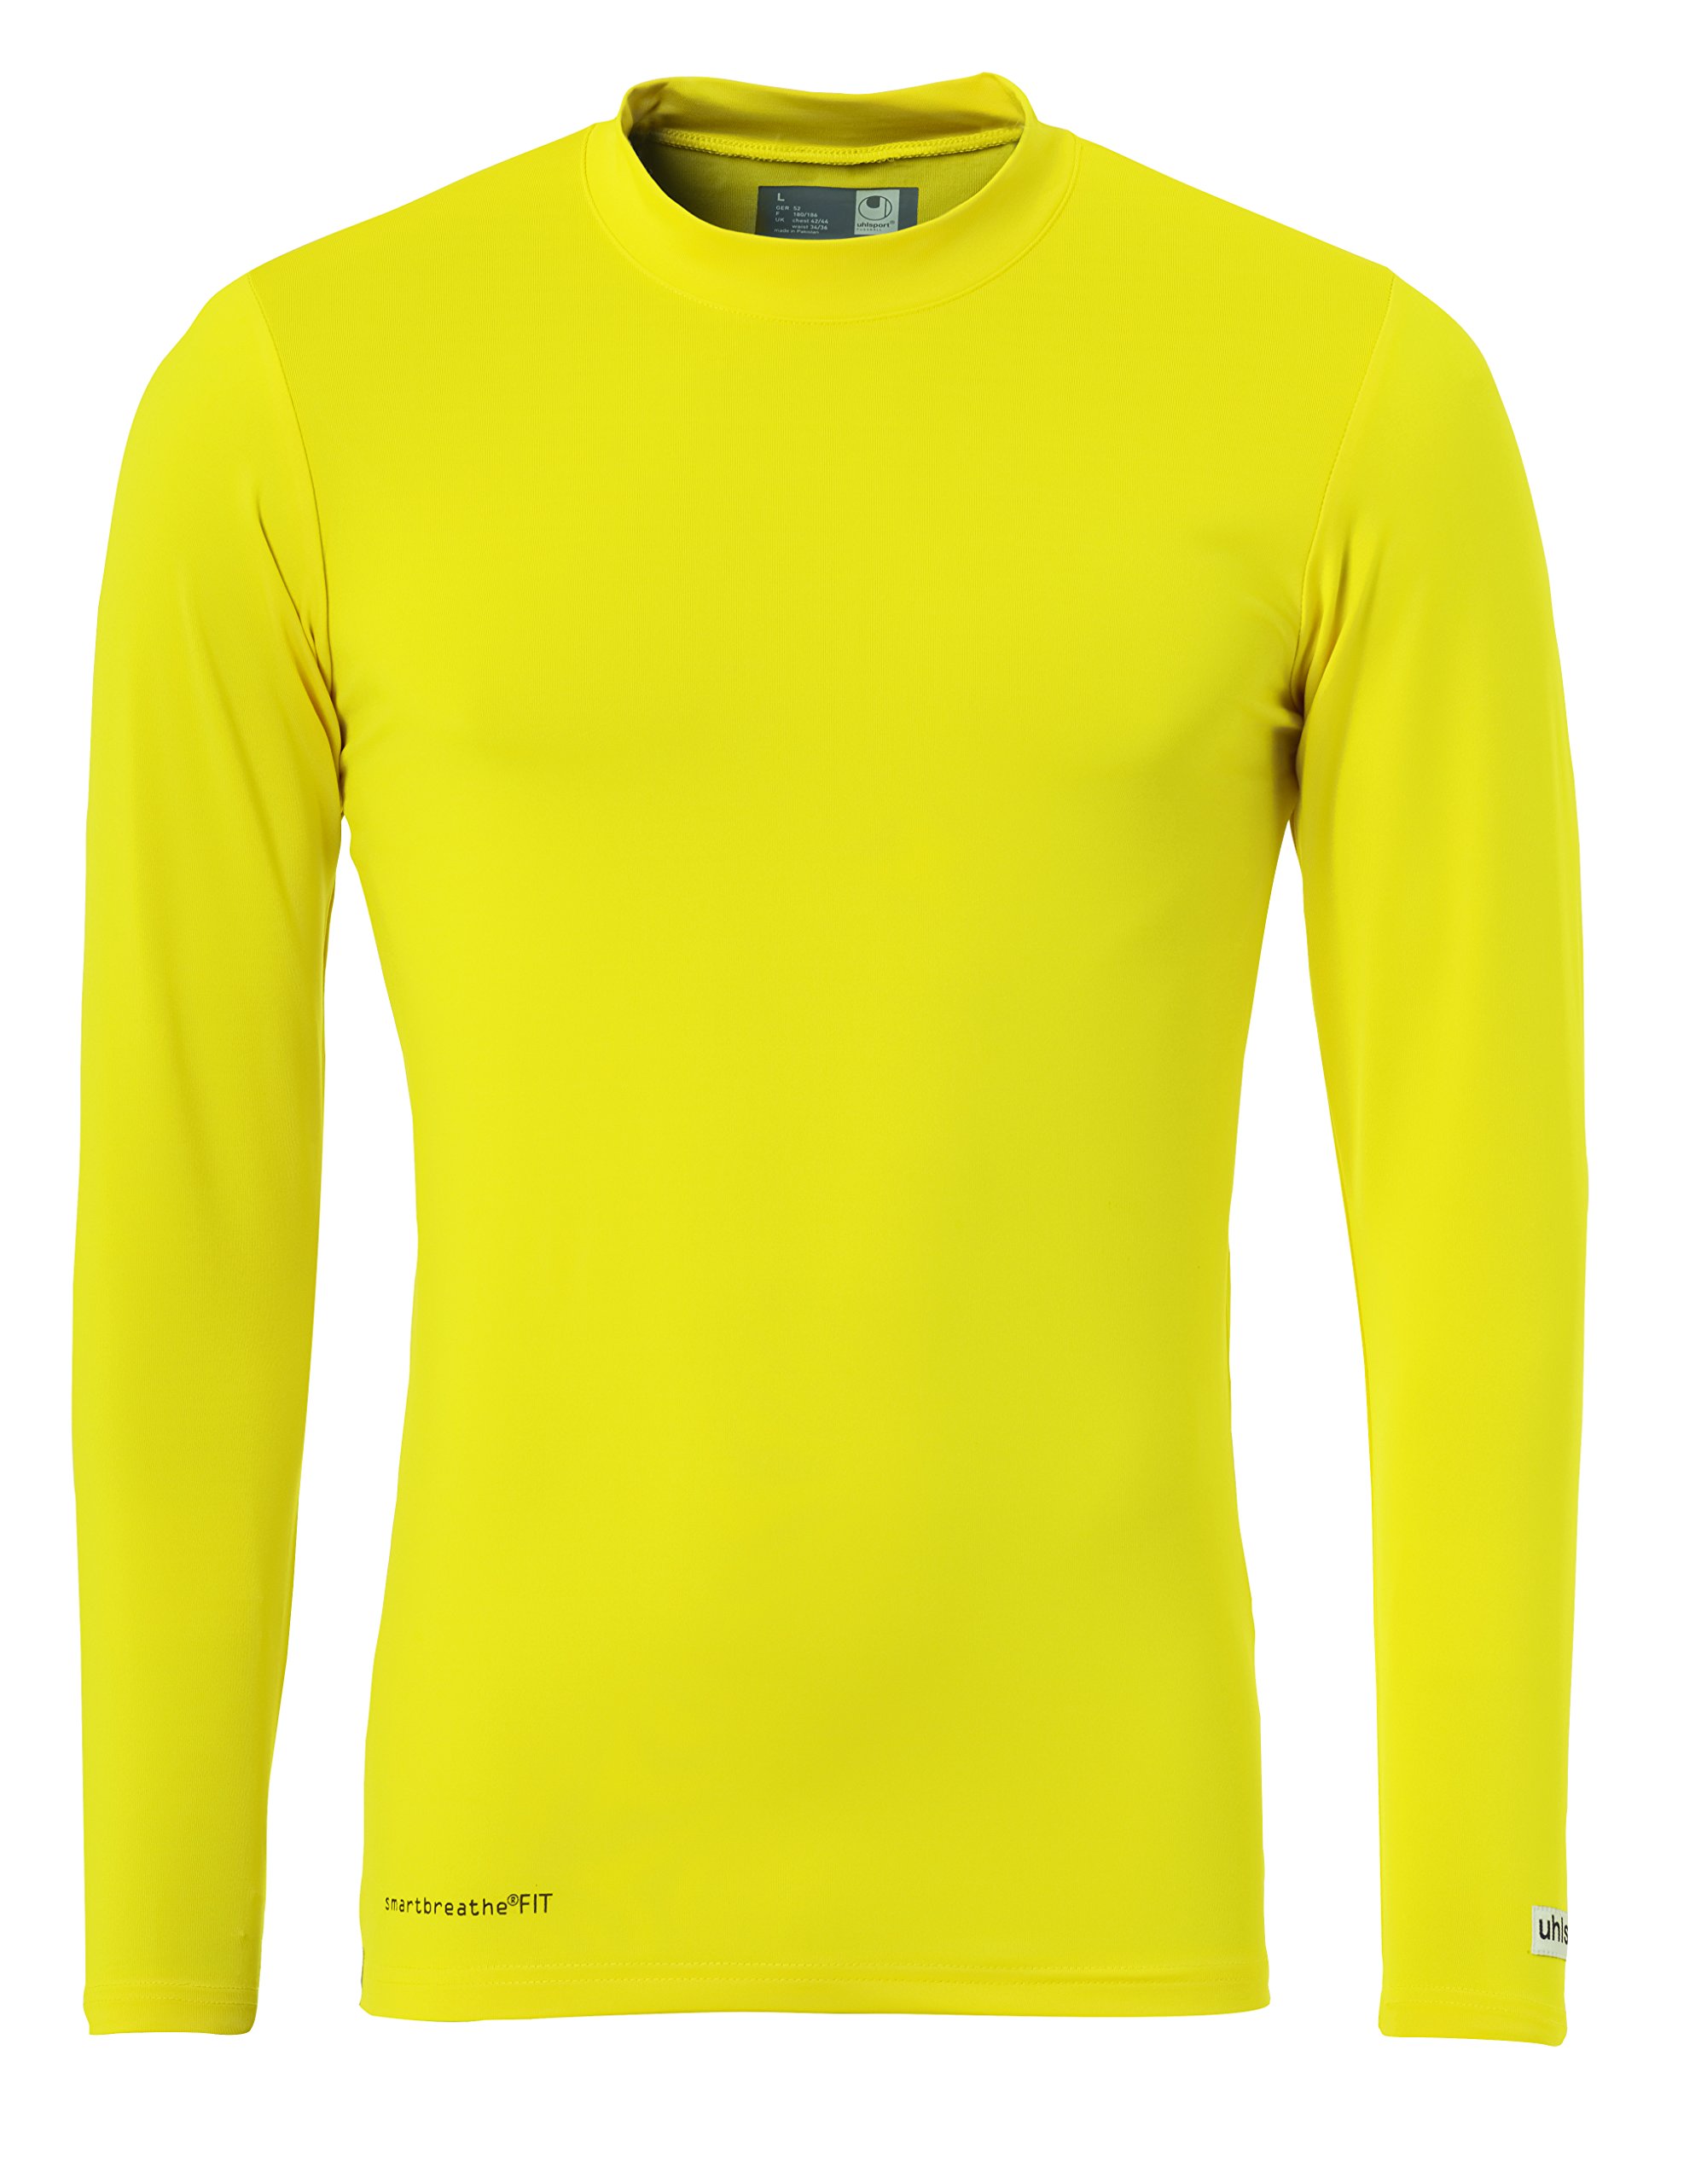 uhlsport Unisex Beklædning teamsport funktionel skjorte Herren Langarmshirt, Limonengelb, M EU